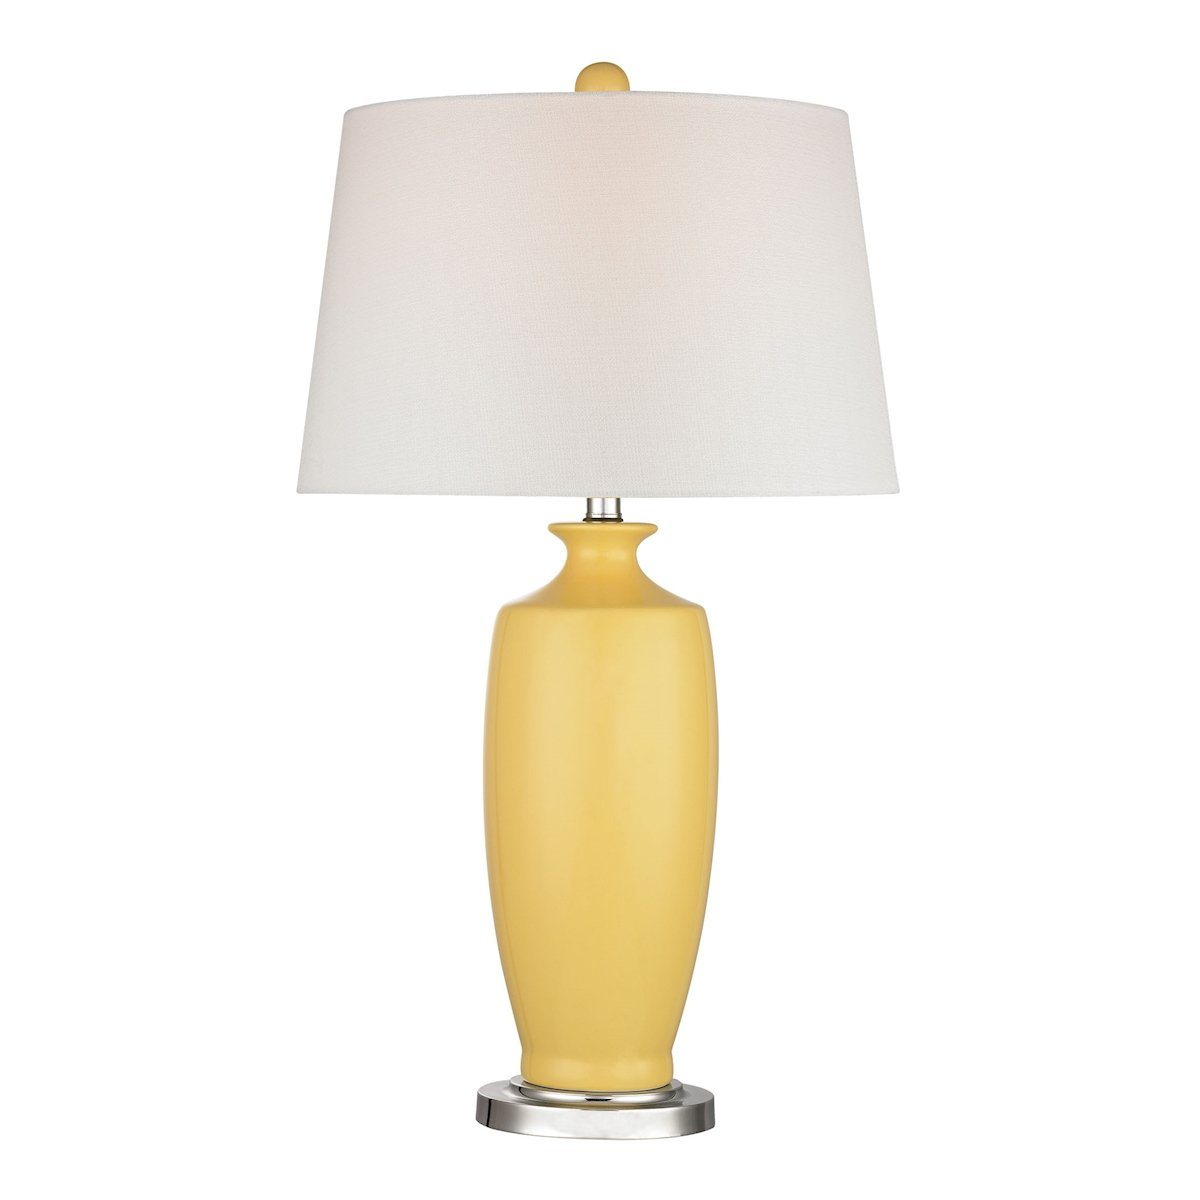 Halisham Ceramic Table Lamp in Sunshine Yellow Lamps Dimond Lighting 